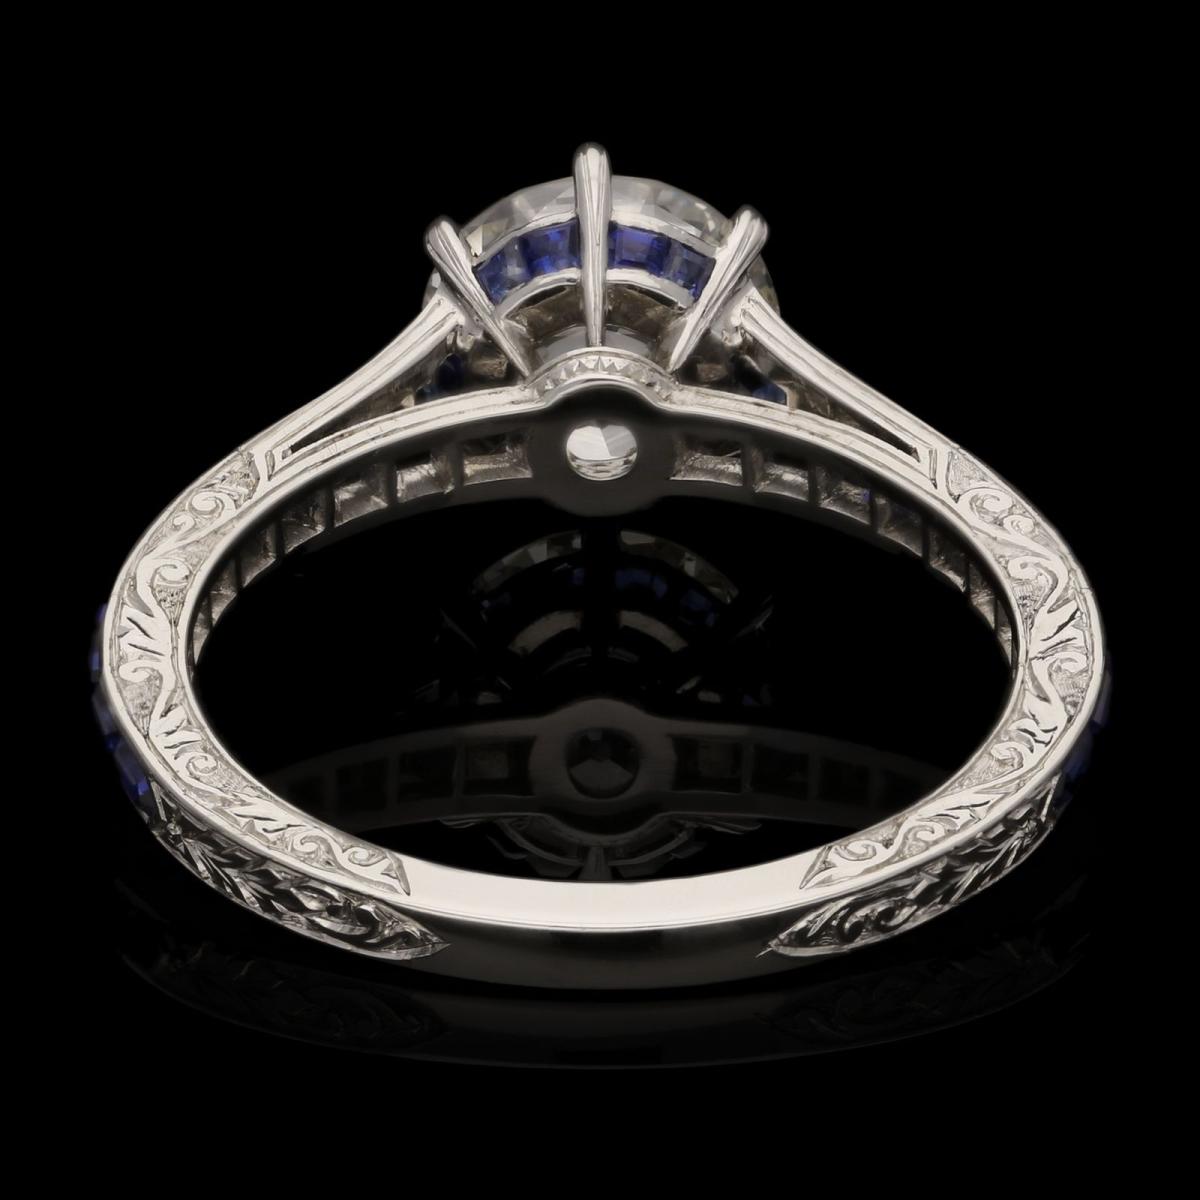 Hancocks 1.75ct Old European Brilliant Cut Diamond Ring Calibre-Cut Sapphire Band